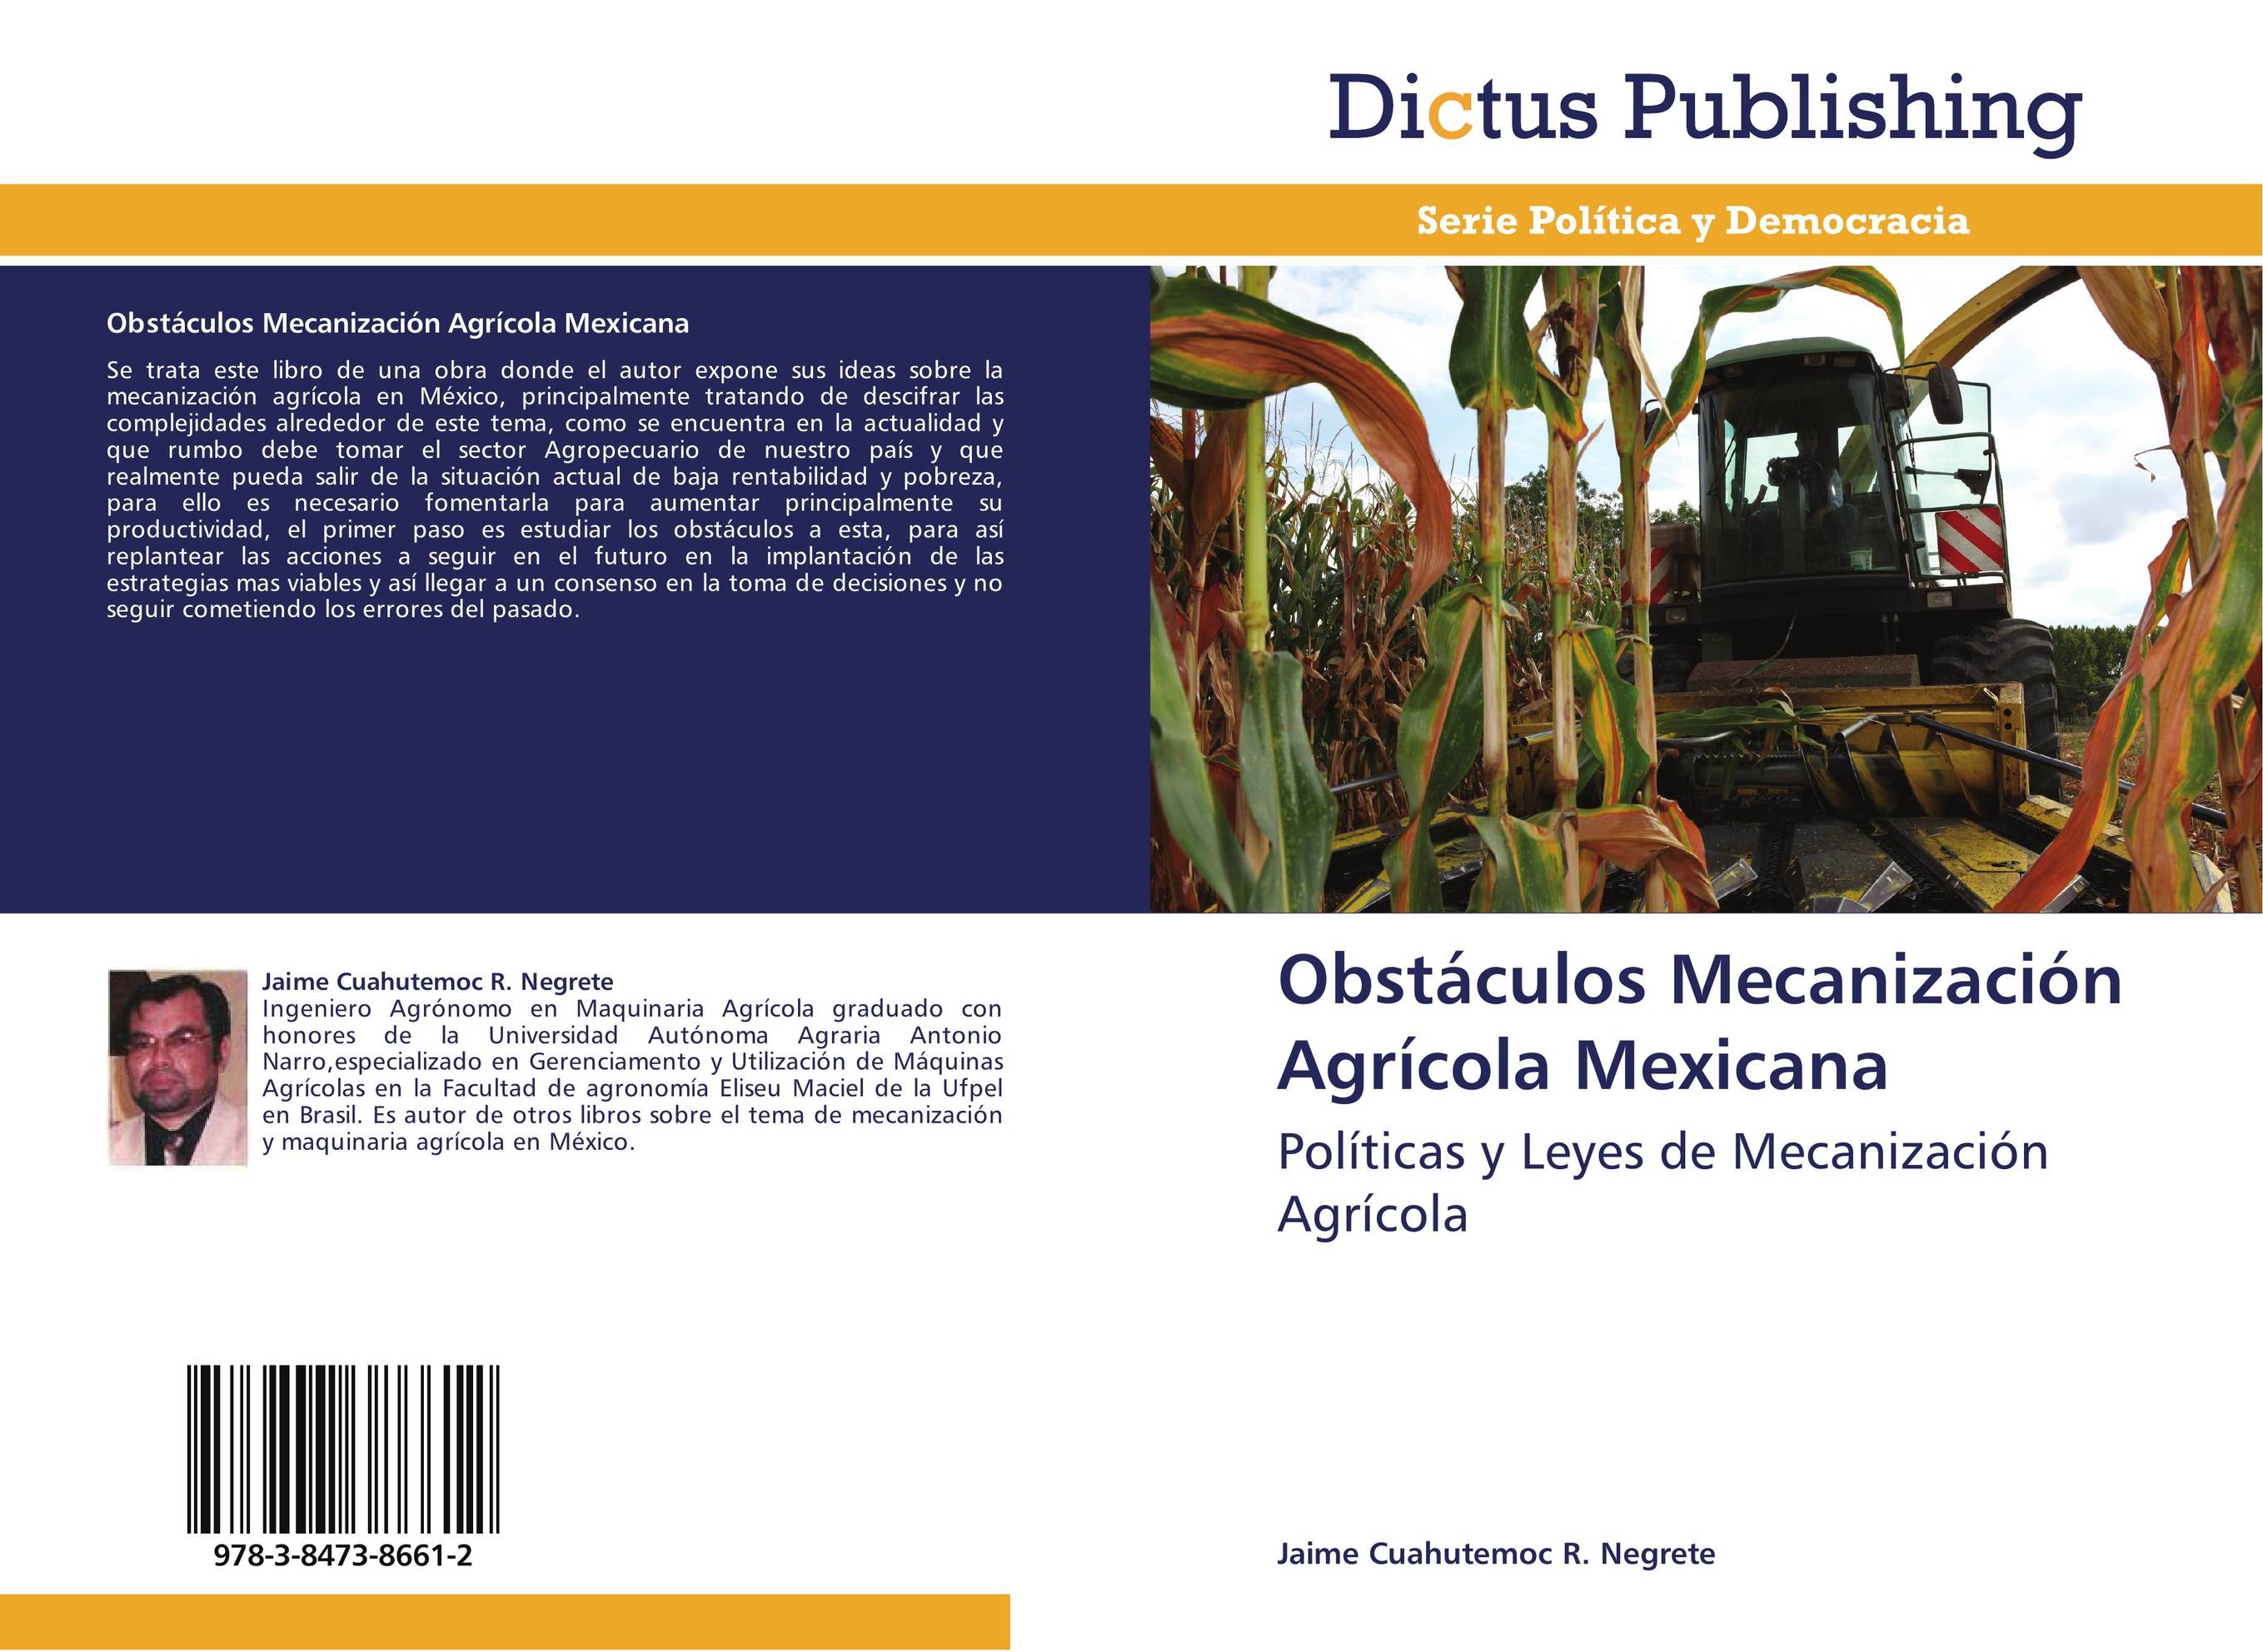 Obstáculos Mecanización Agrícola Mexicana